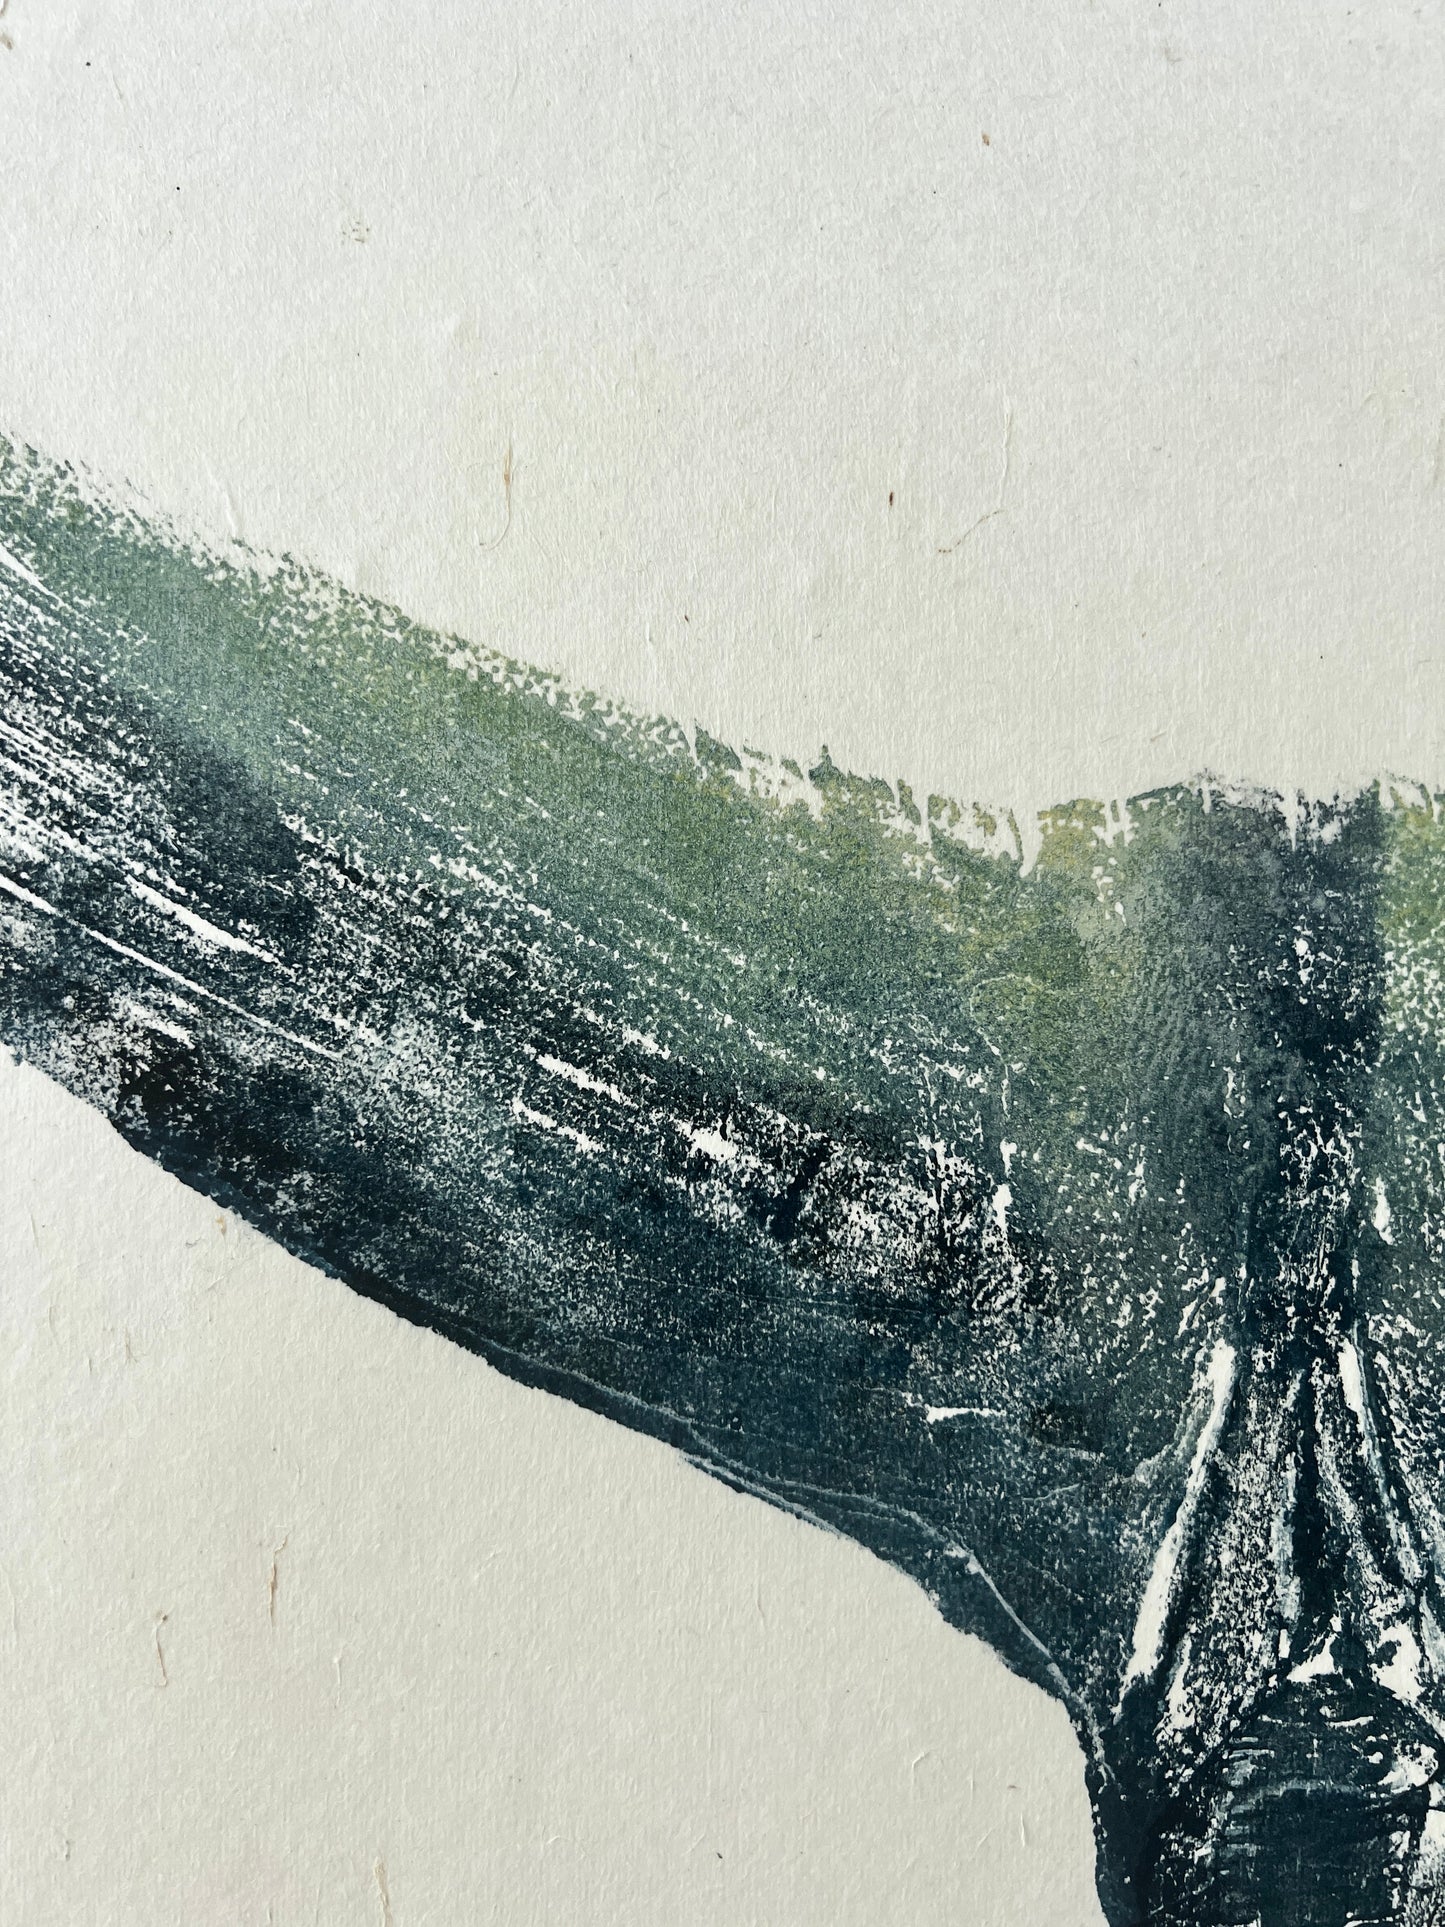 Gyotaku impression taken from a Blue Fin Tuna Tail